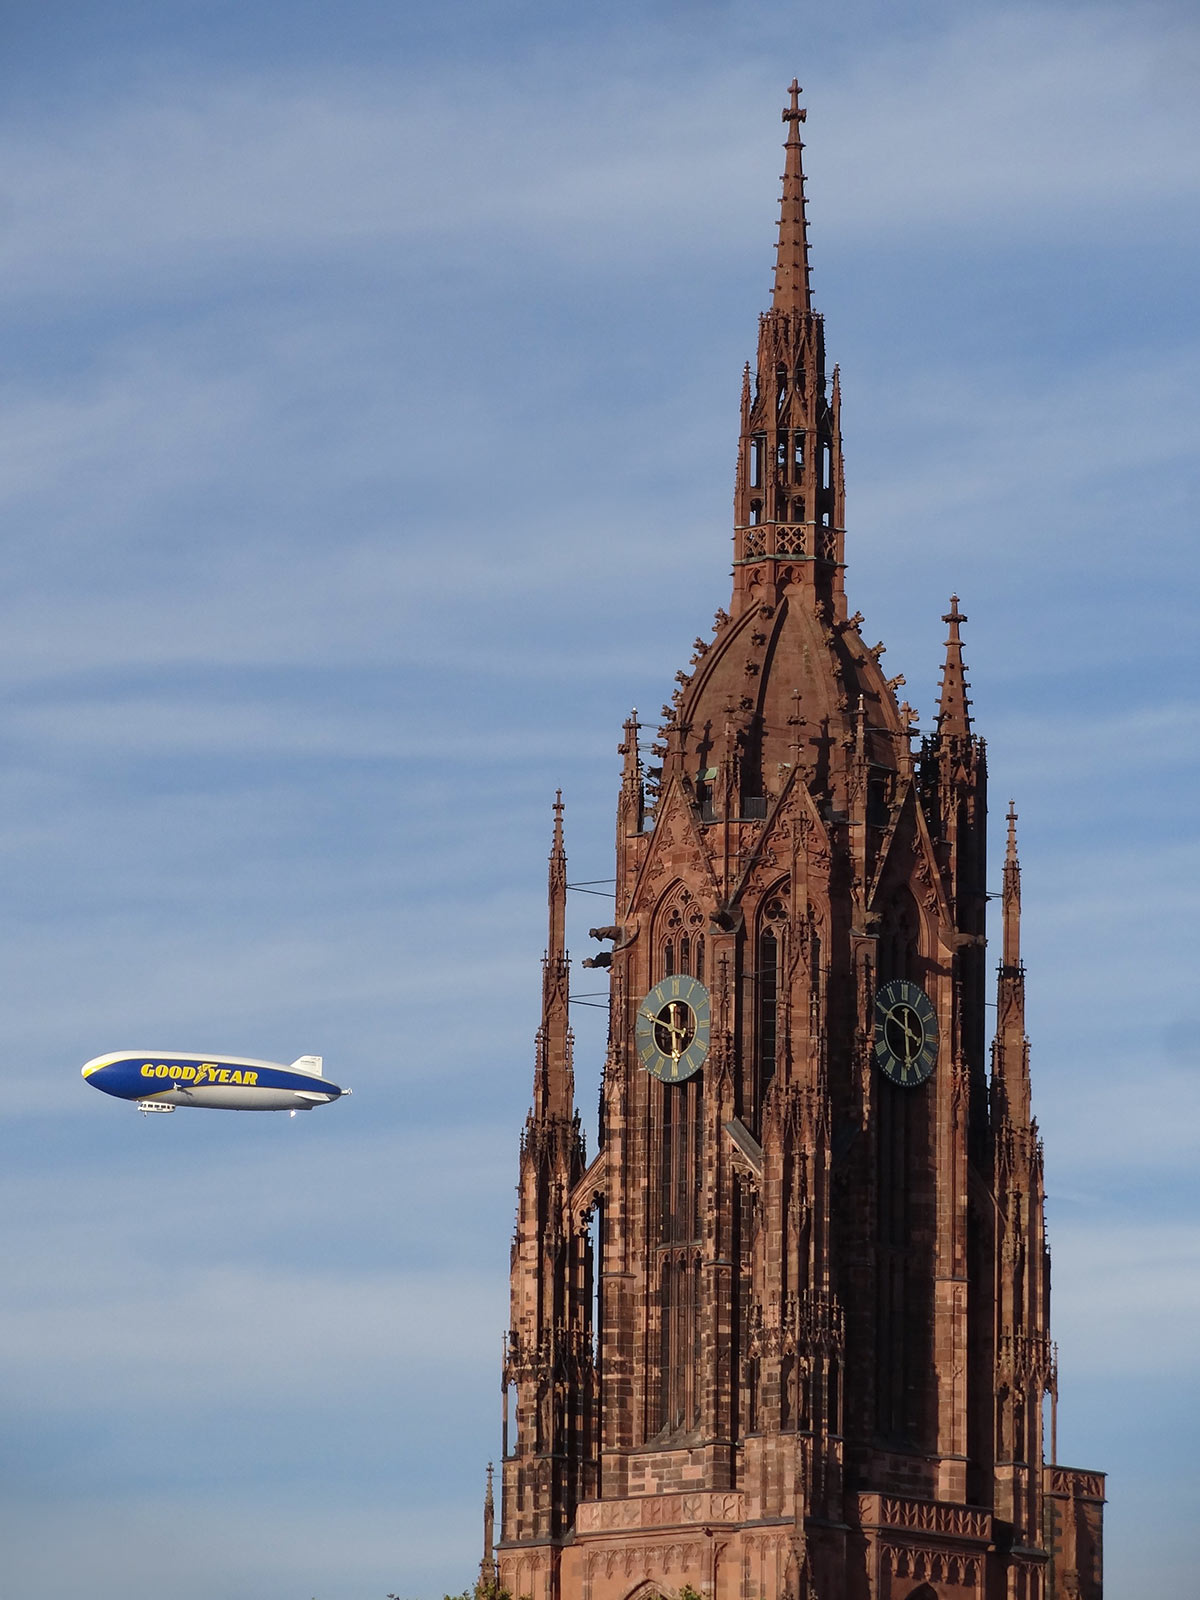 Goodyear-Zeppelin fliegt am Frankfurter Dom vorbei